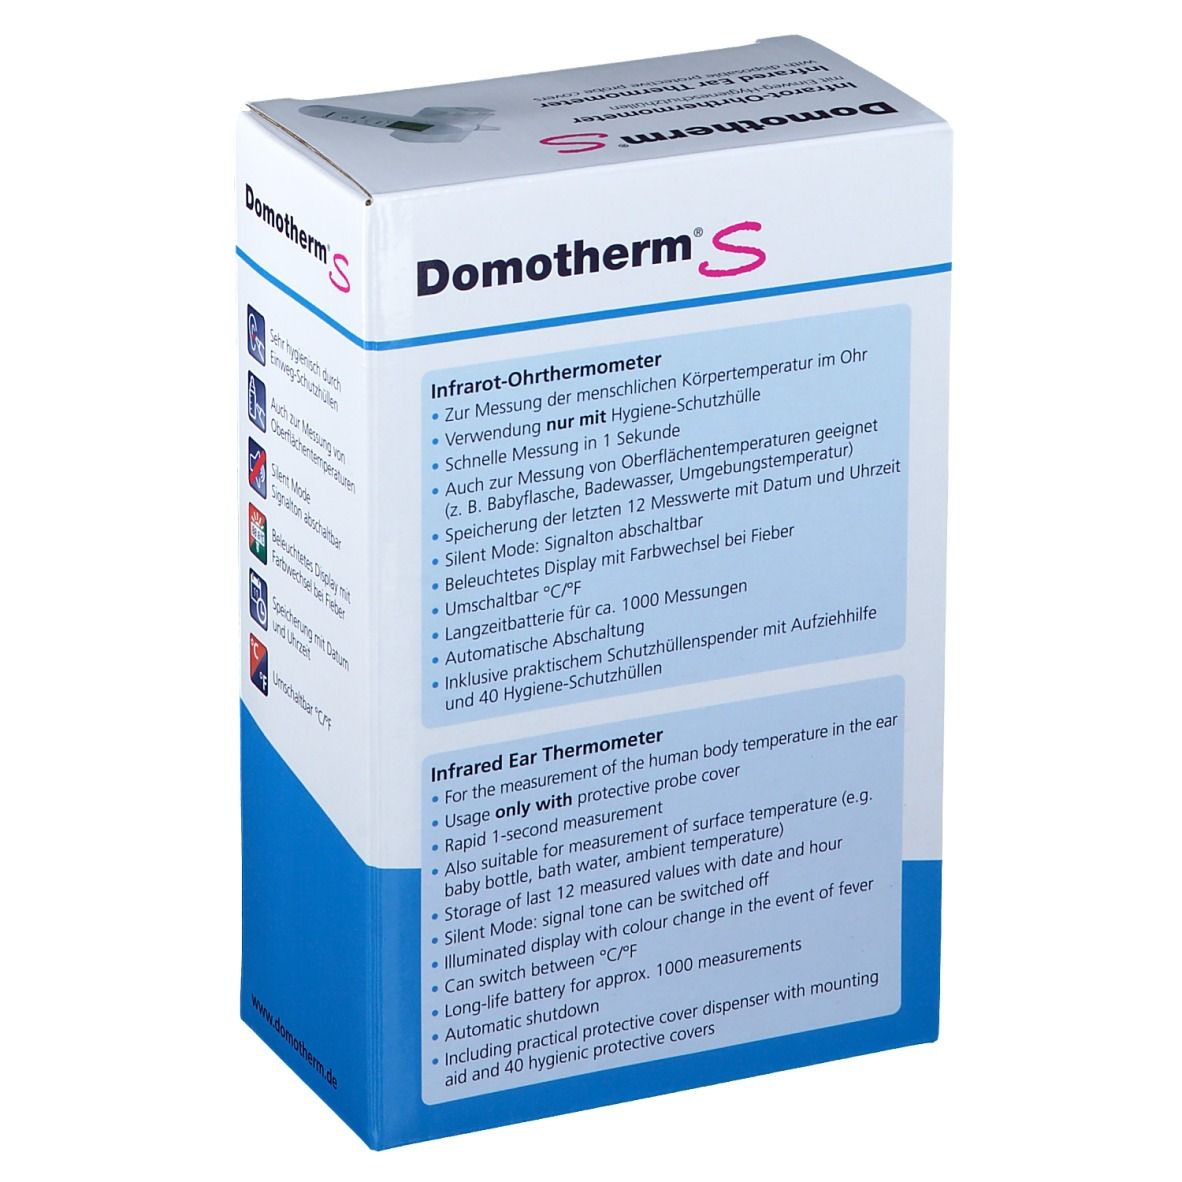 Domotherm® S